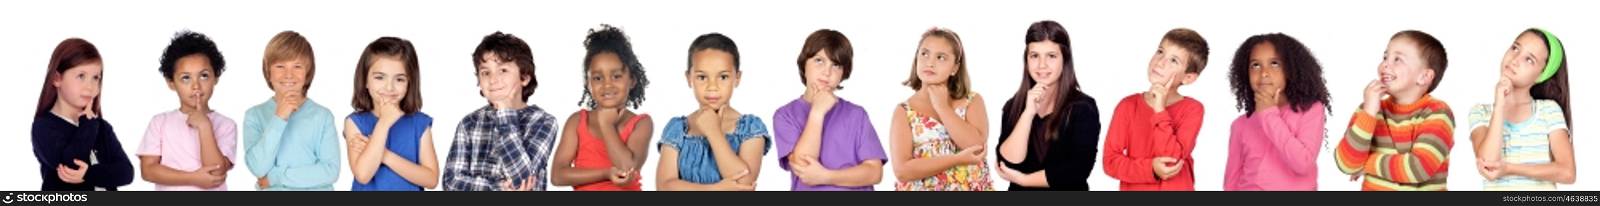 Many children thinking isolate on a white background